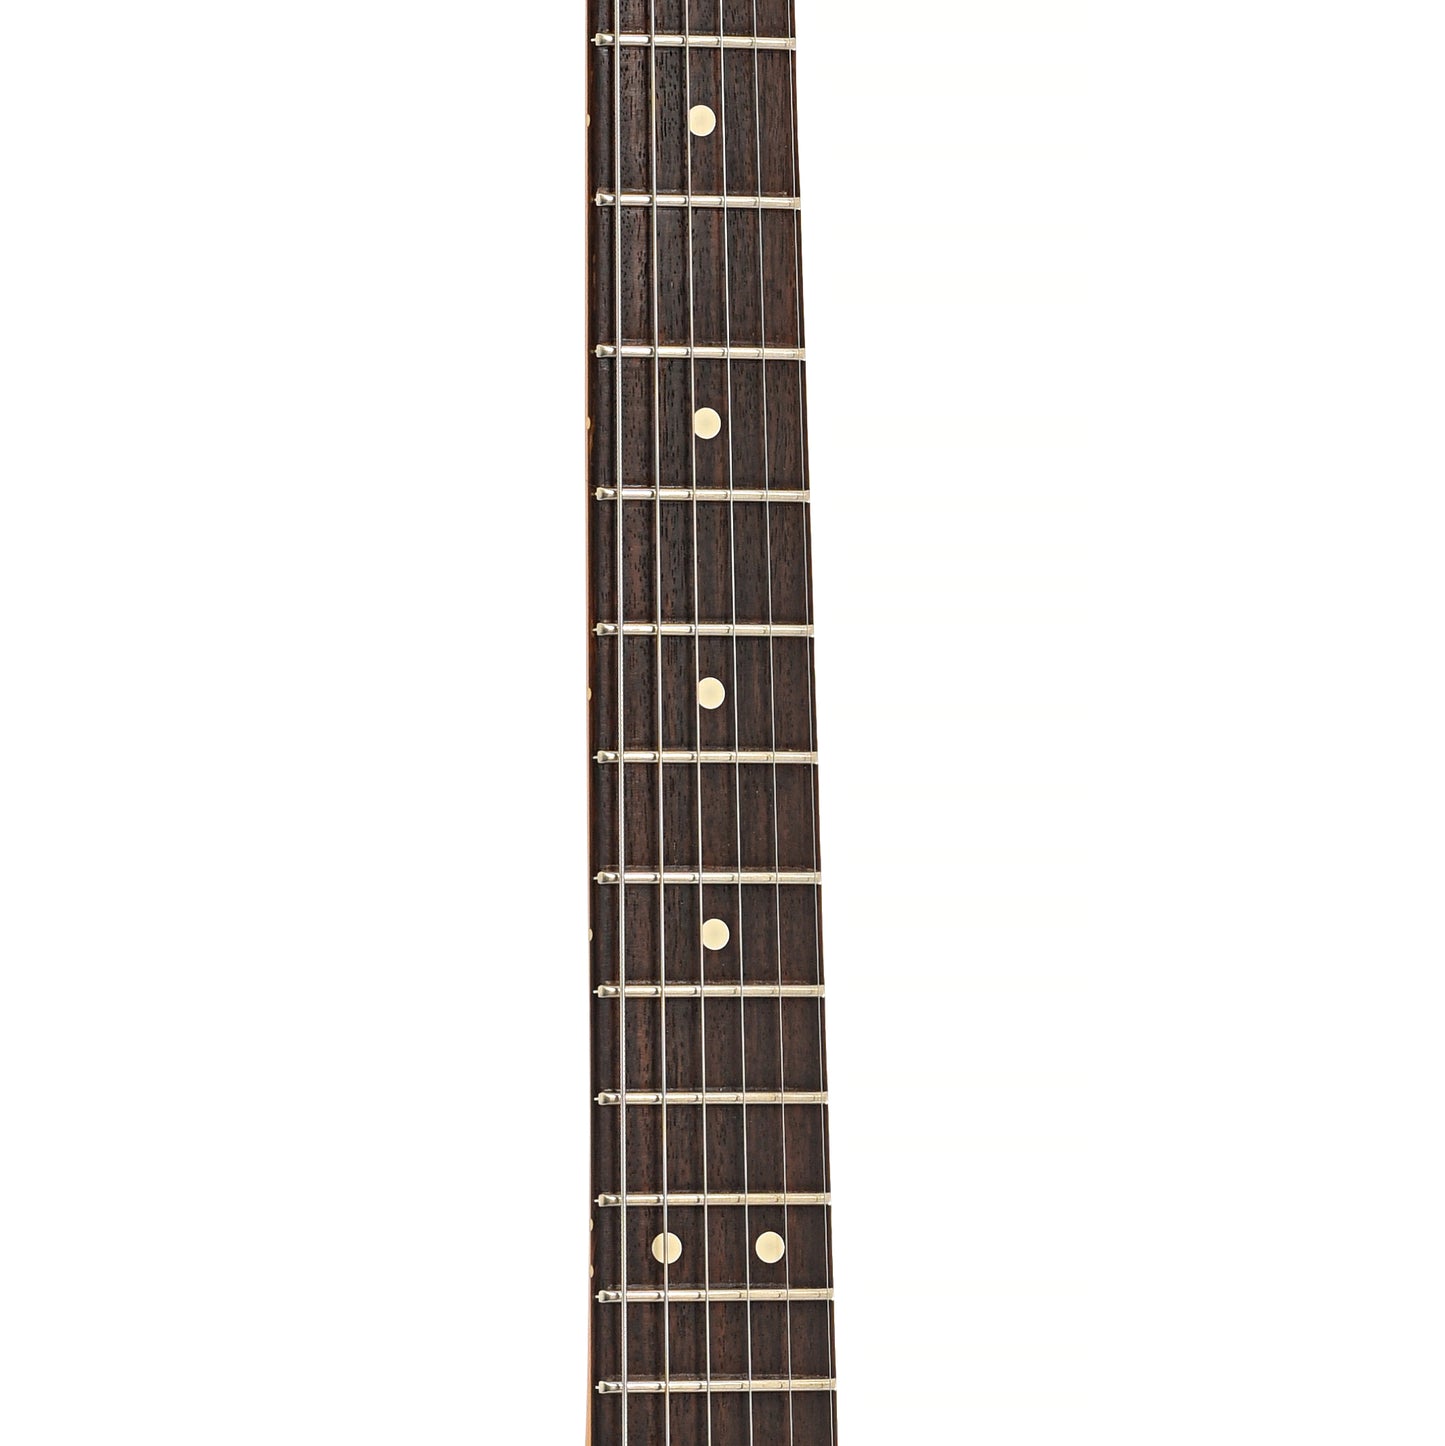 Fretboard of Fender American Standard 50th Anniversary Telecaster